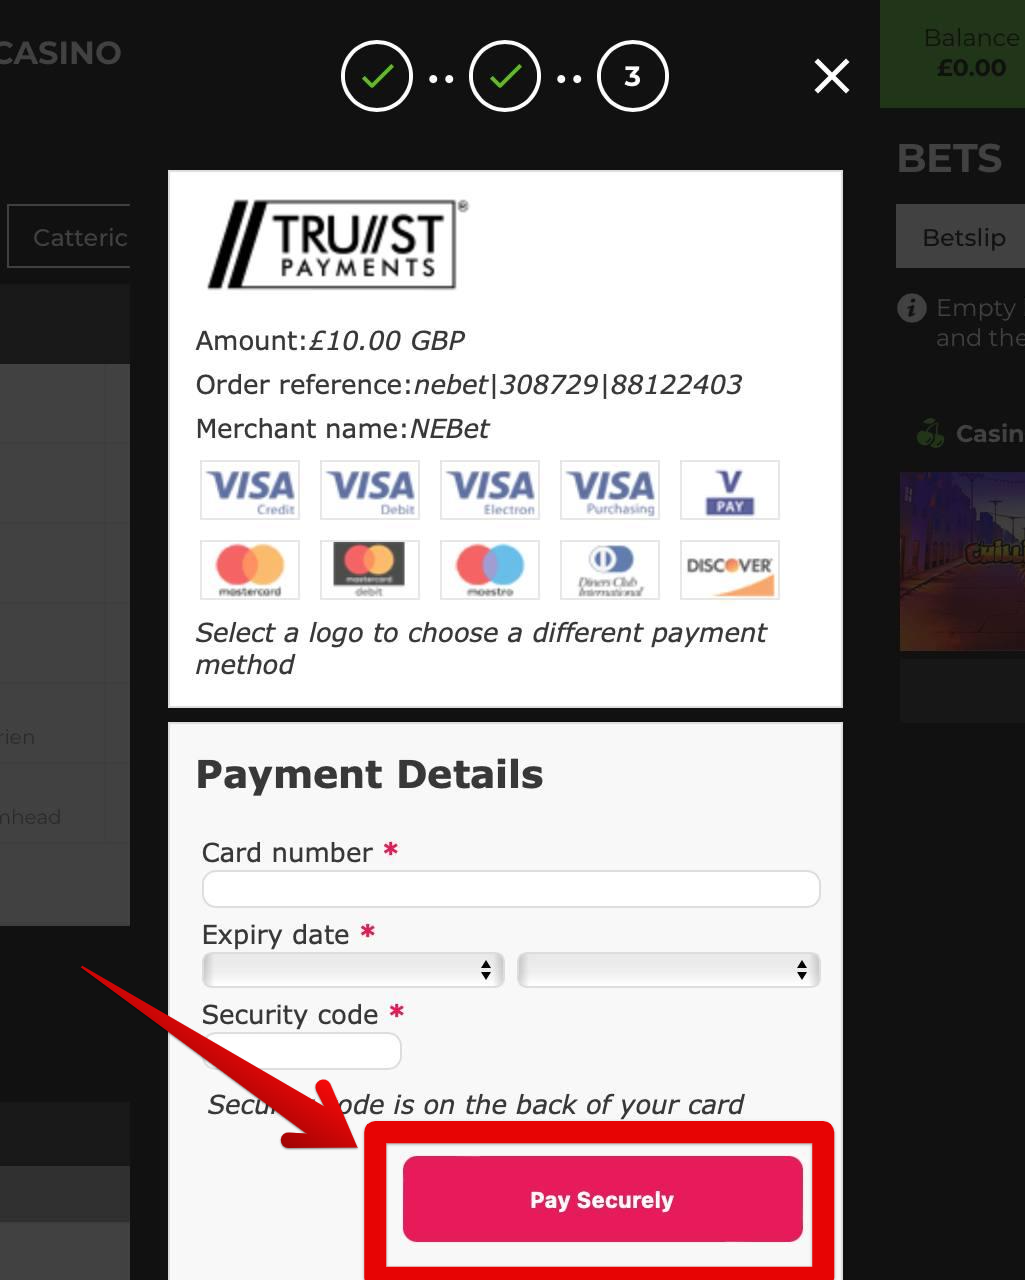 Enter the payment details